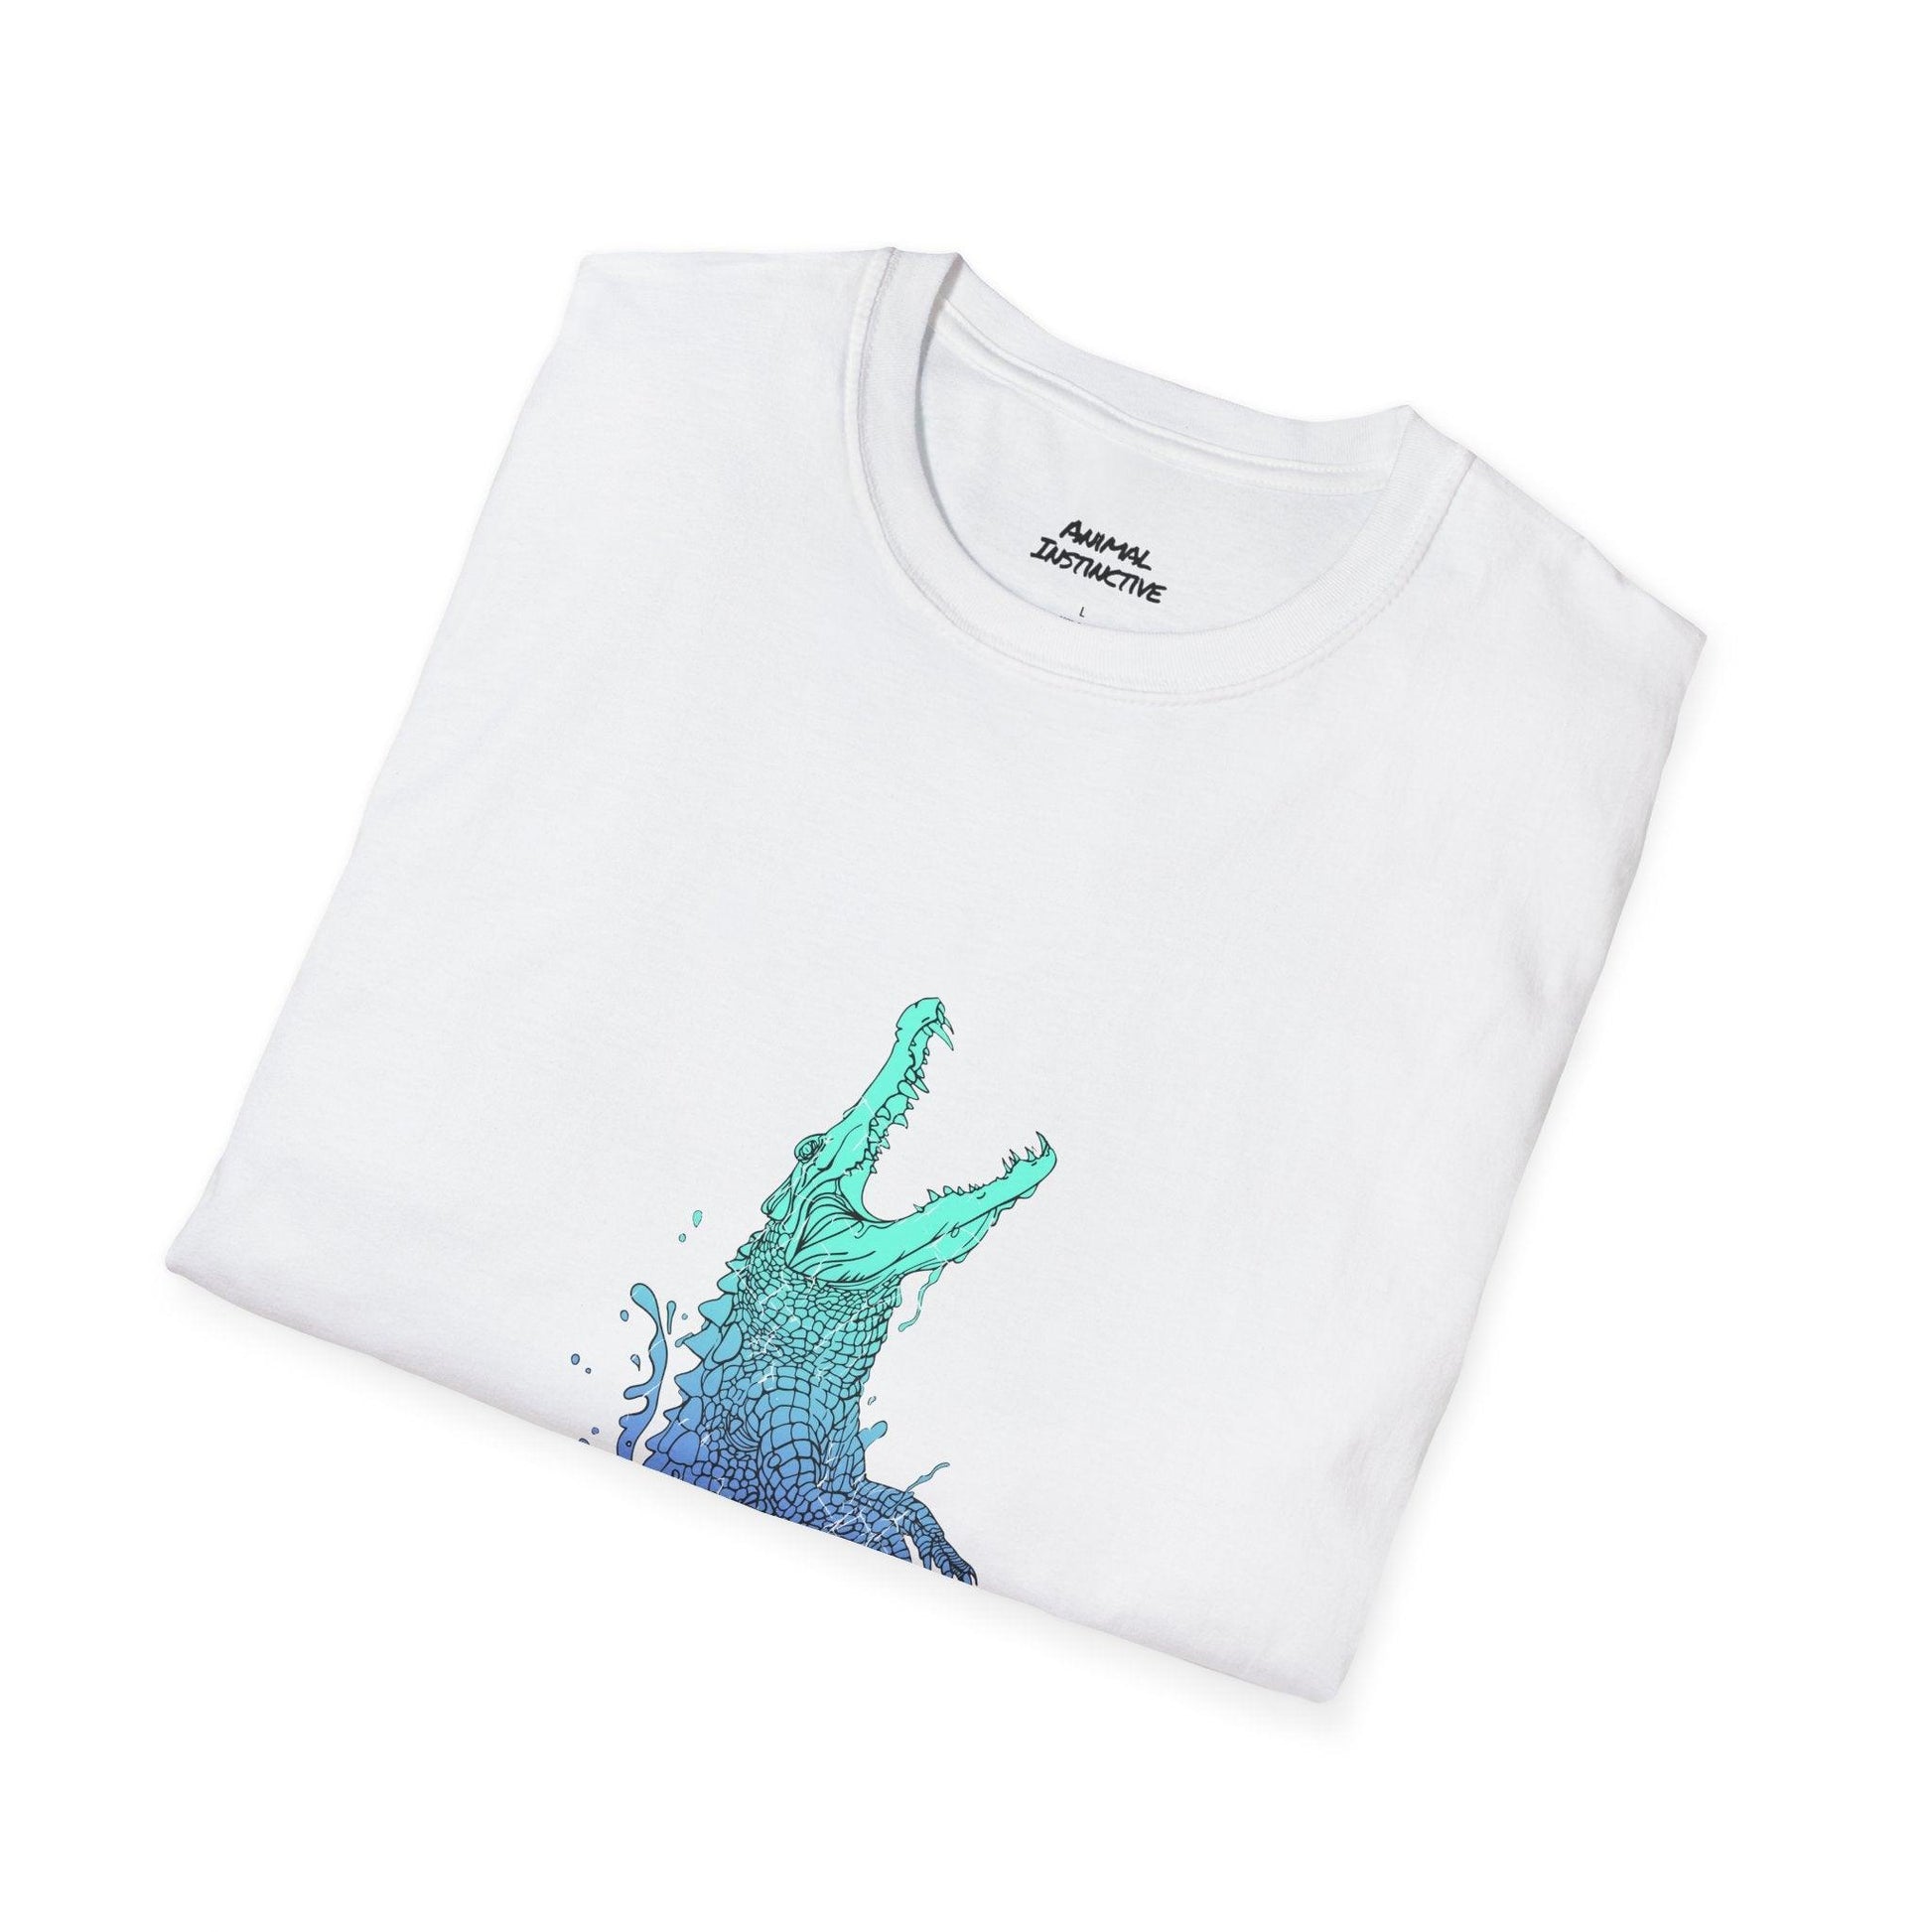 Nebula Crocodile Reptile Graphic T-shirt - Animal Instinctive